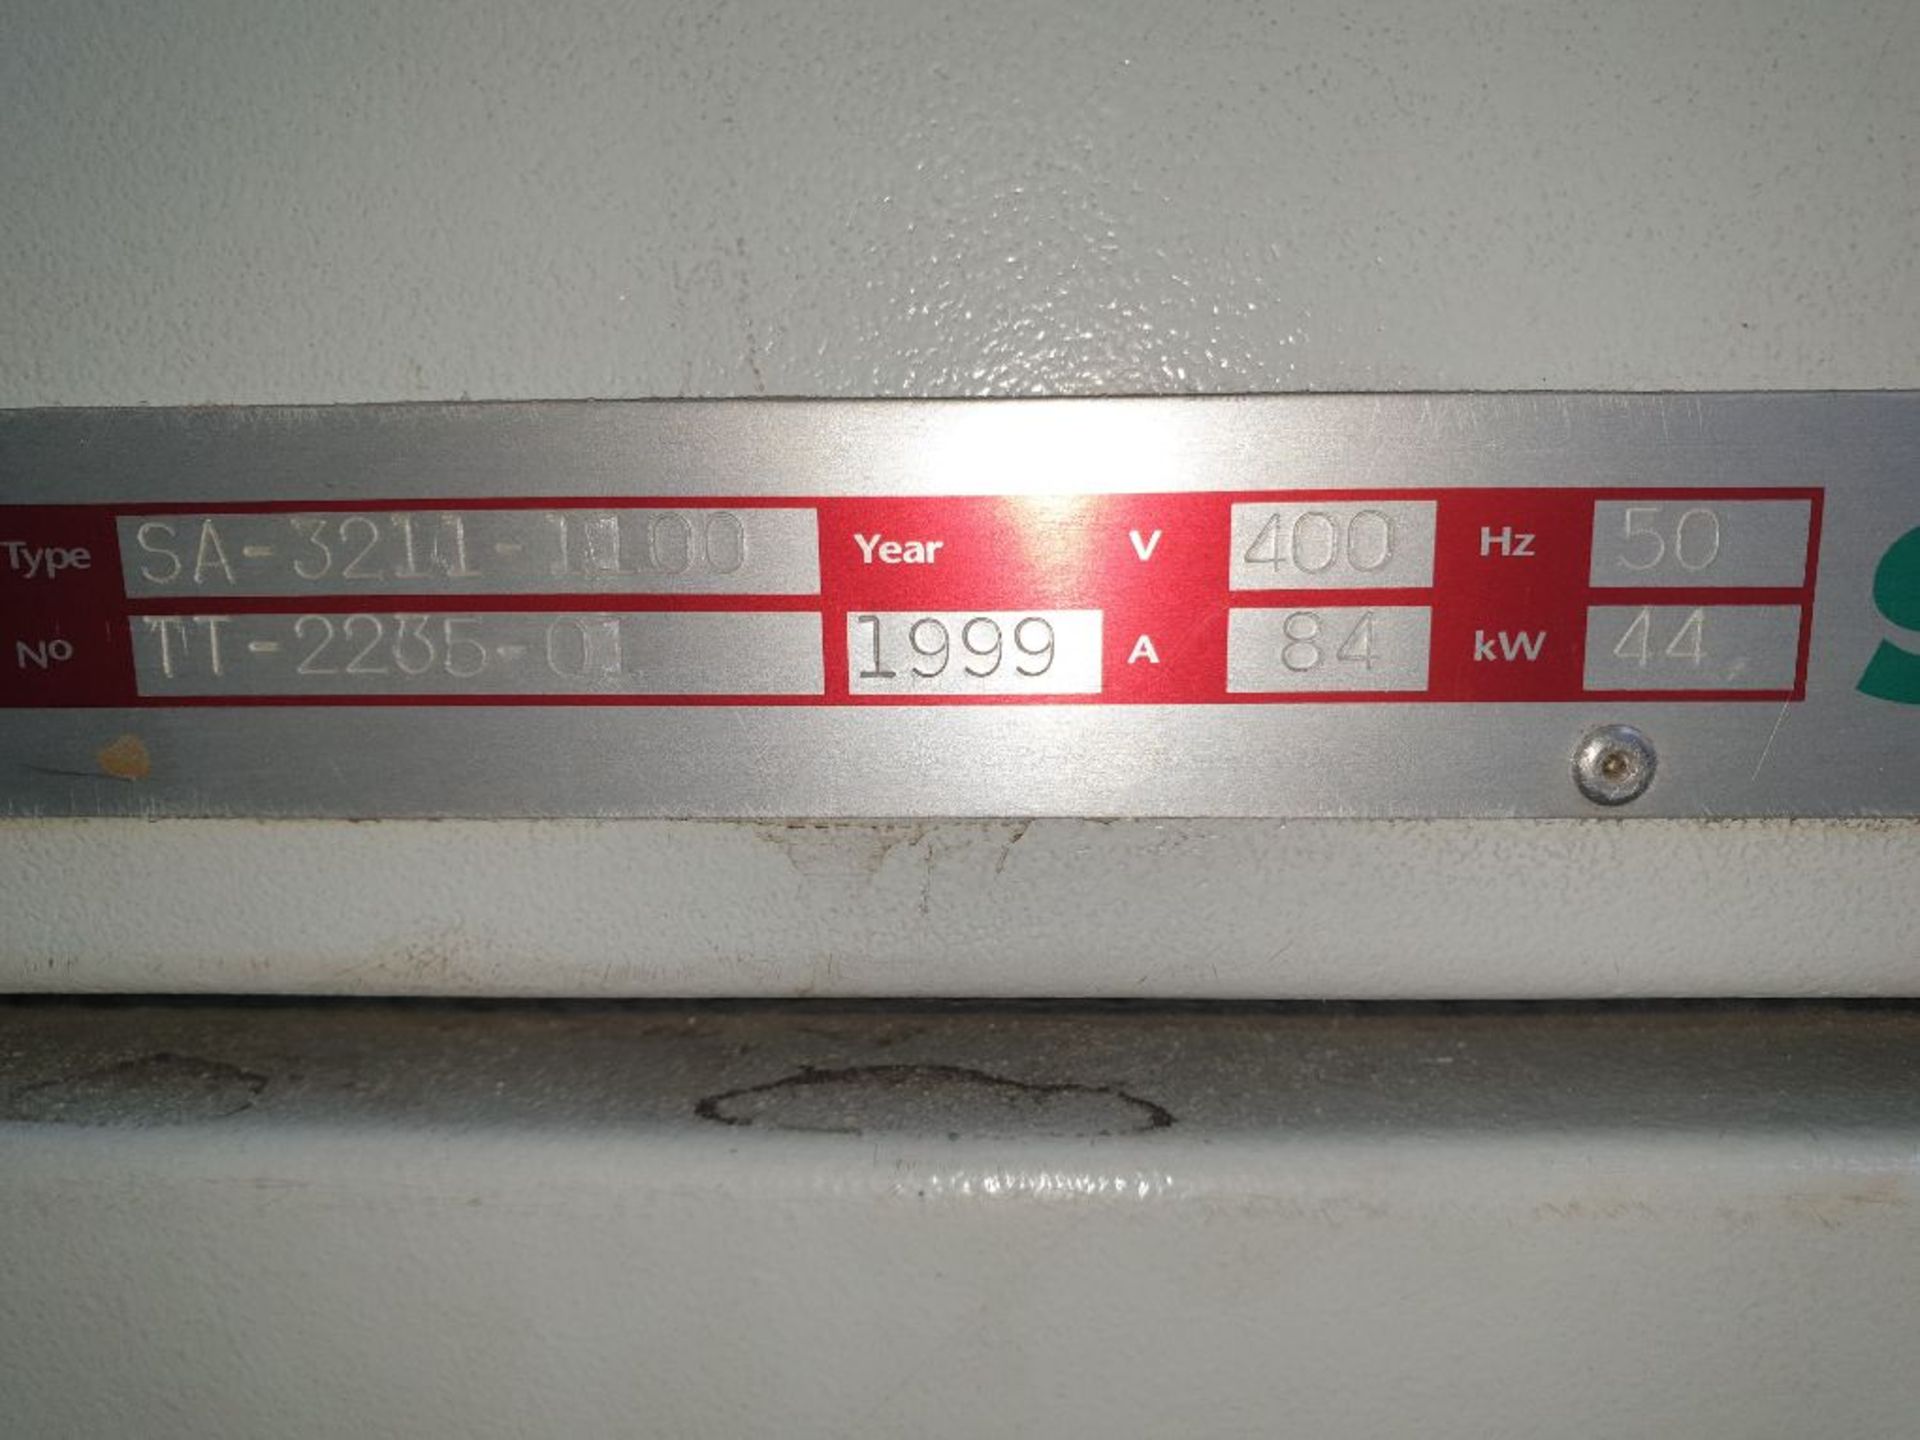 Sanding Master TT 2235-01 Calibrating Sander Bottom, Serial No. SA-3211-1100, Year of Manufacture - Image 9 of 10